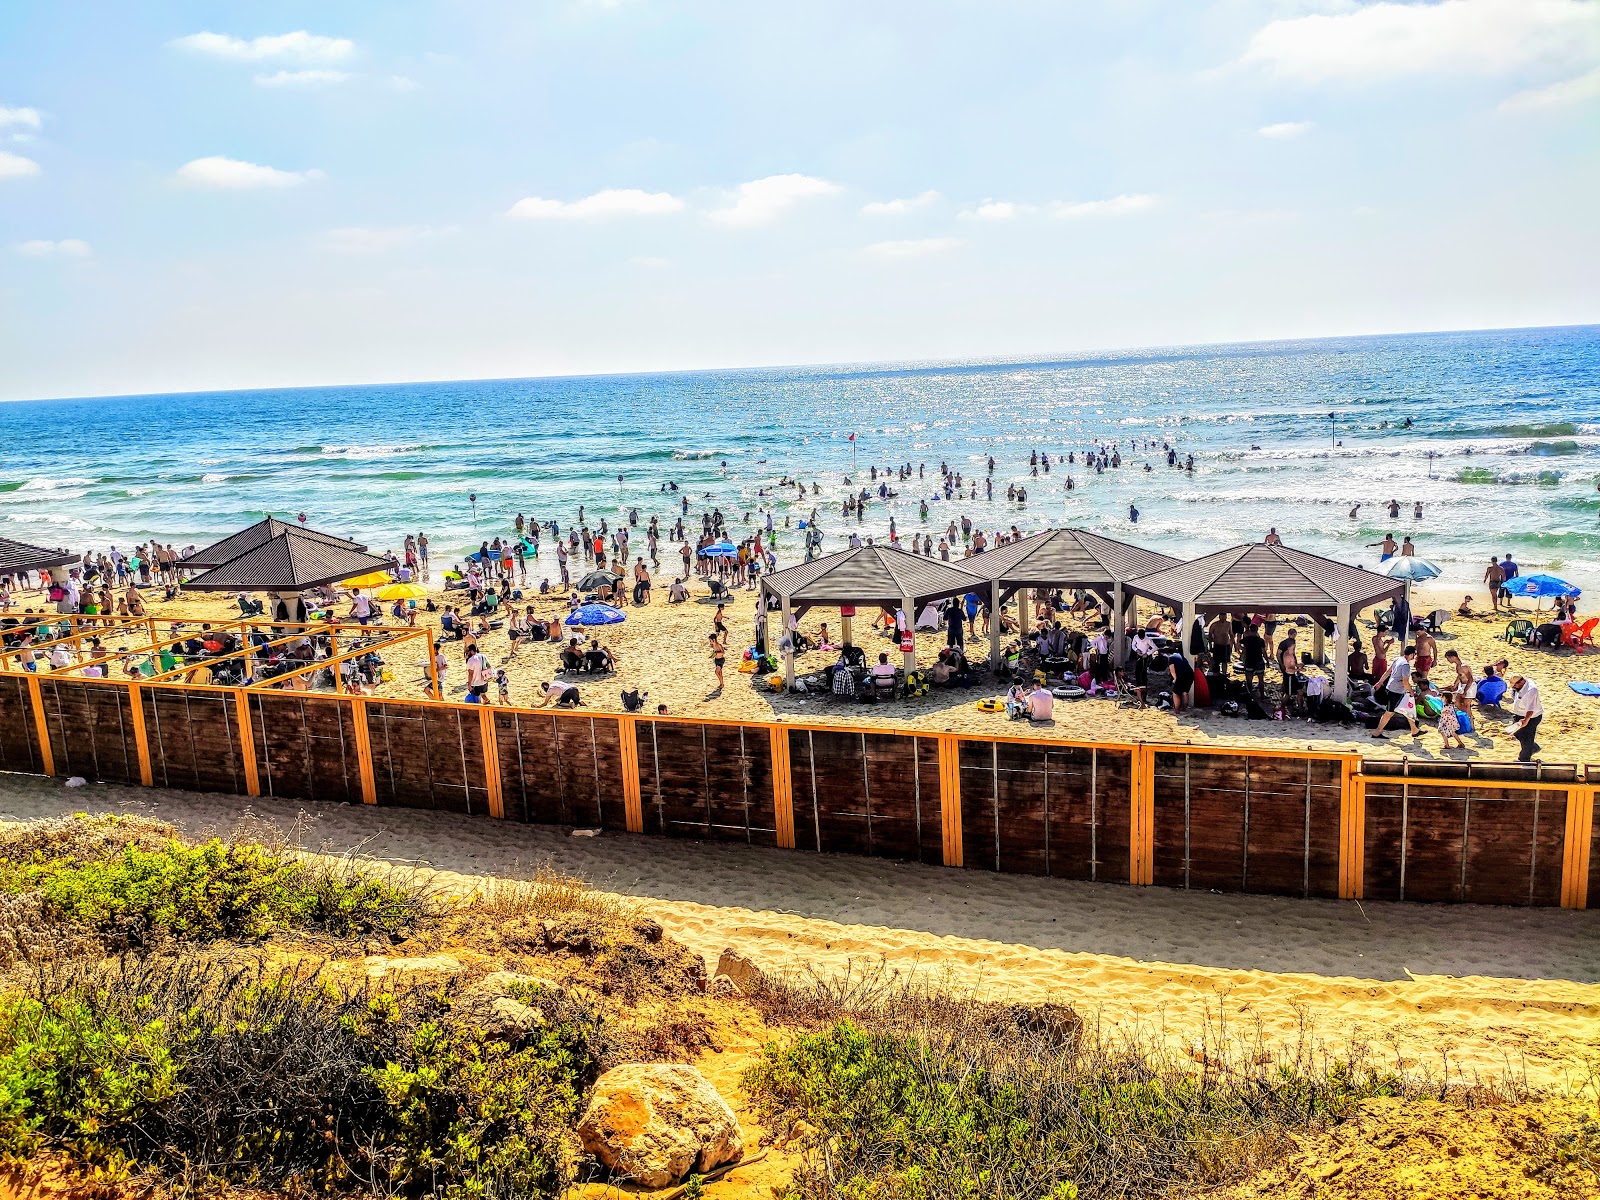 Foto di Kiryat Sanz beach e l'insediamento